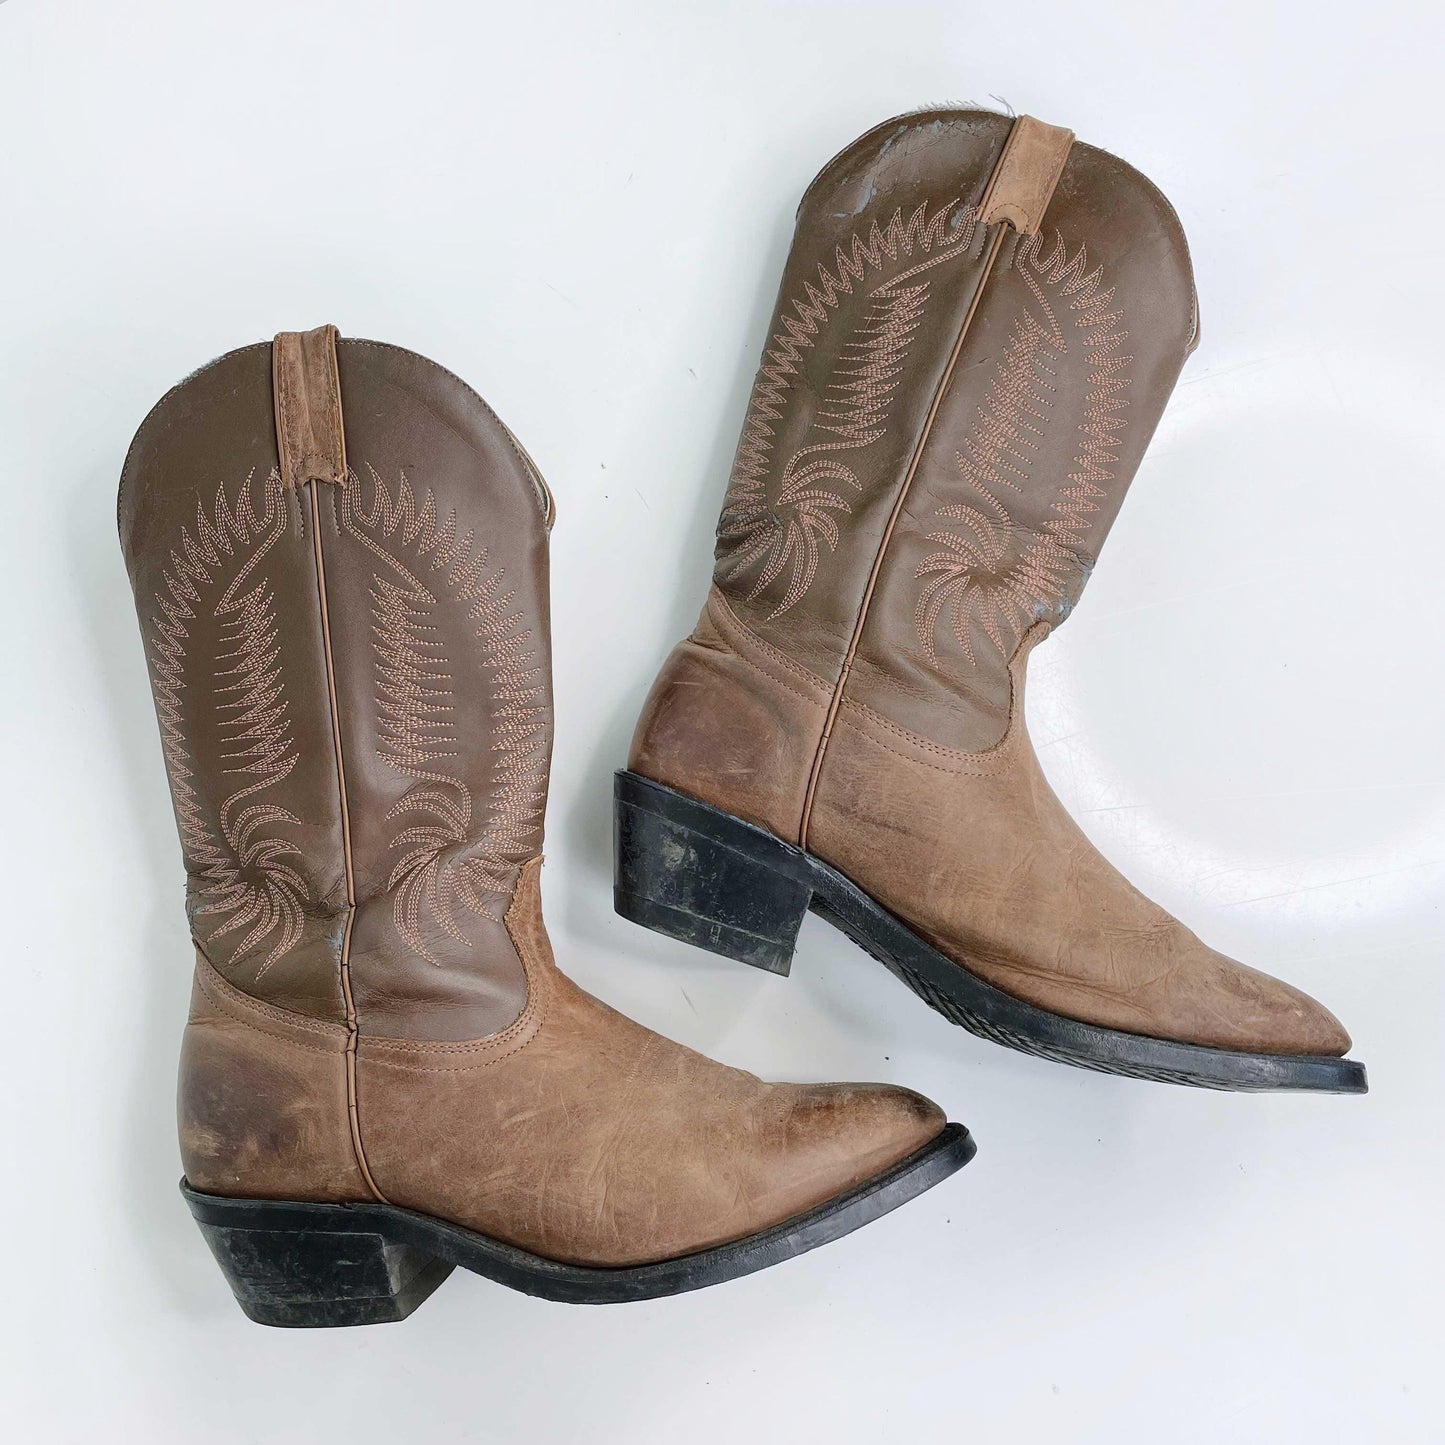 vintage silver rebel cowboy boots - size 8.5 M